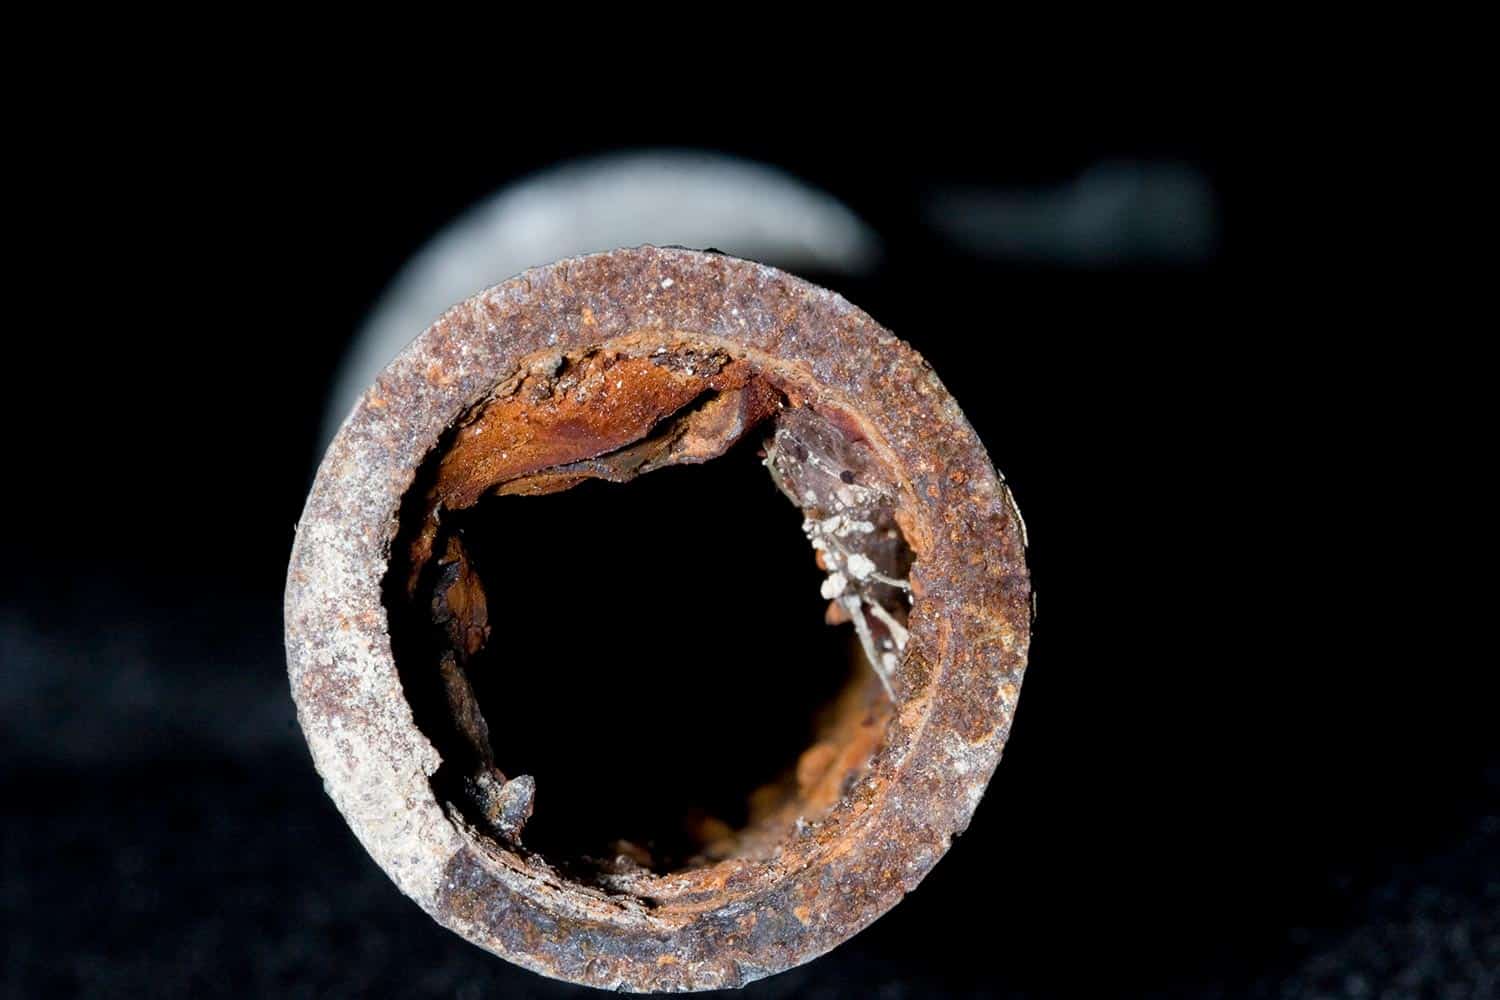 Rusty galvanized pipe